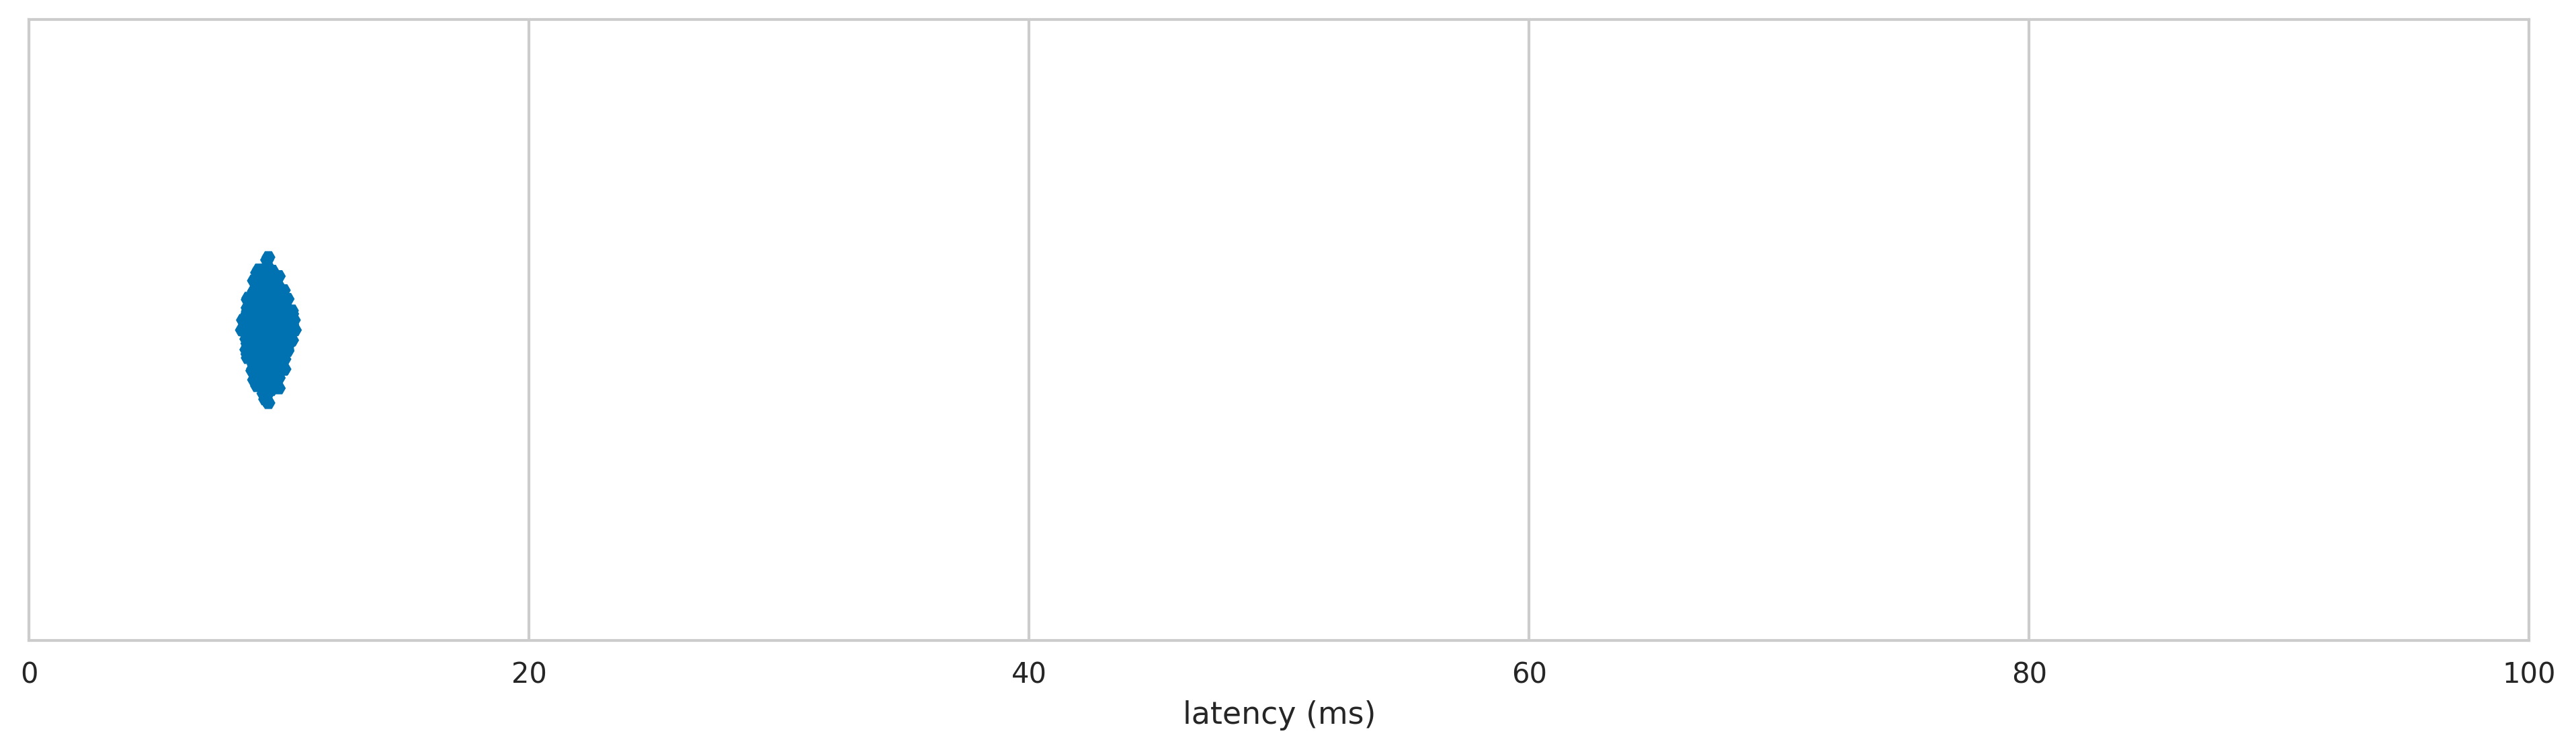 Roccat ISKU FX latency distribution 